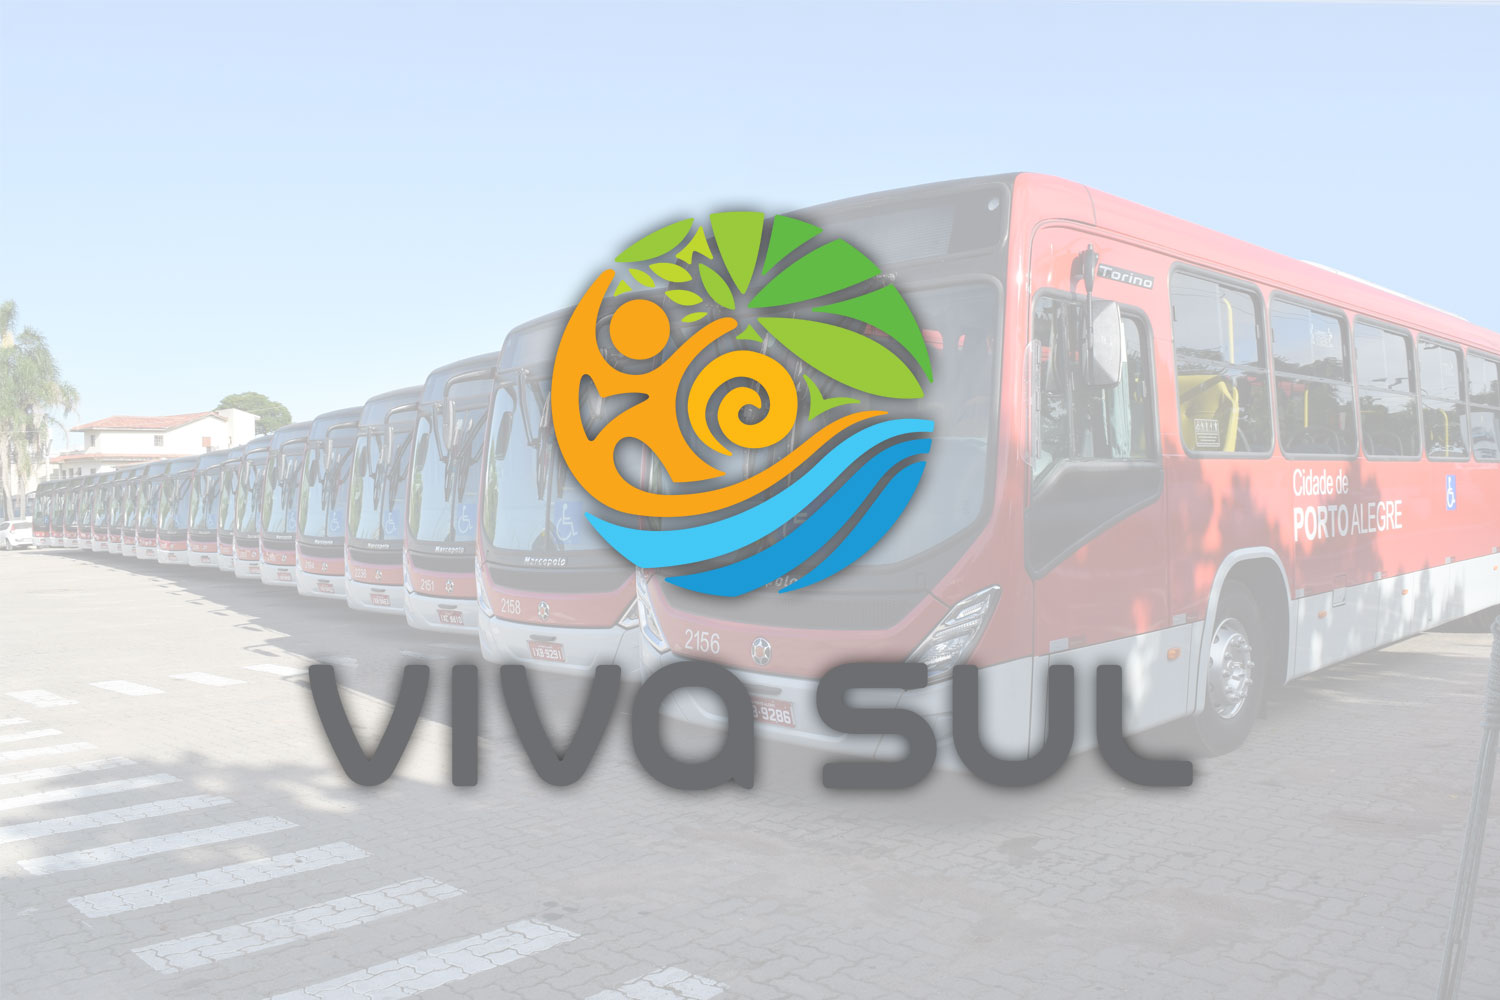 Viva Sul - Porto Alegre